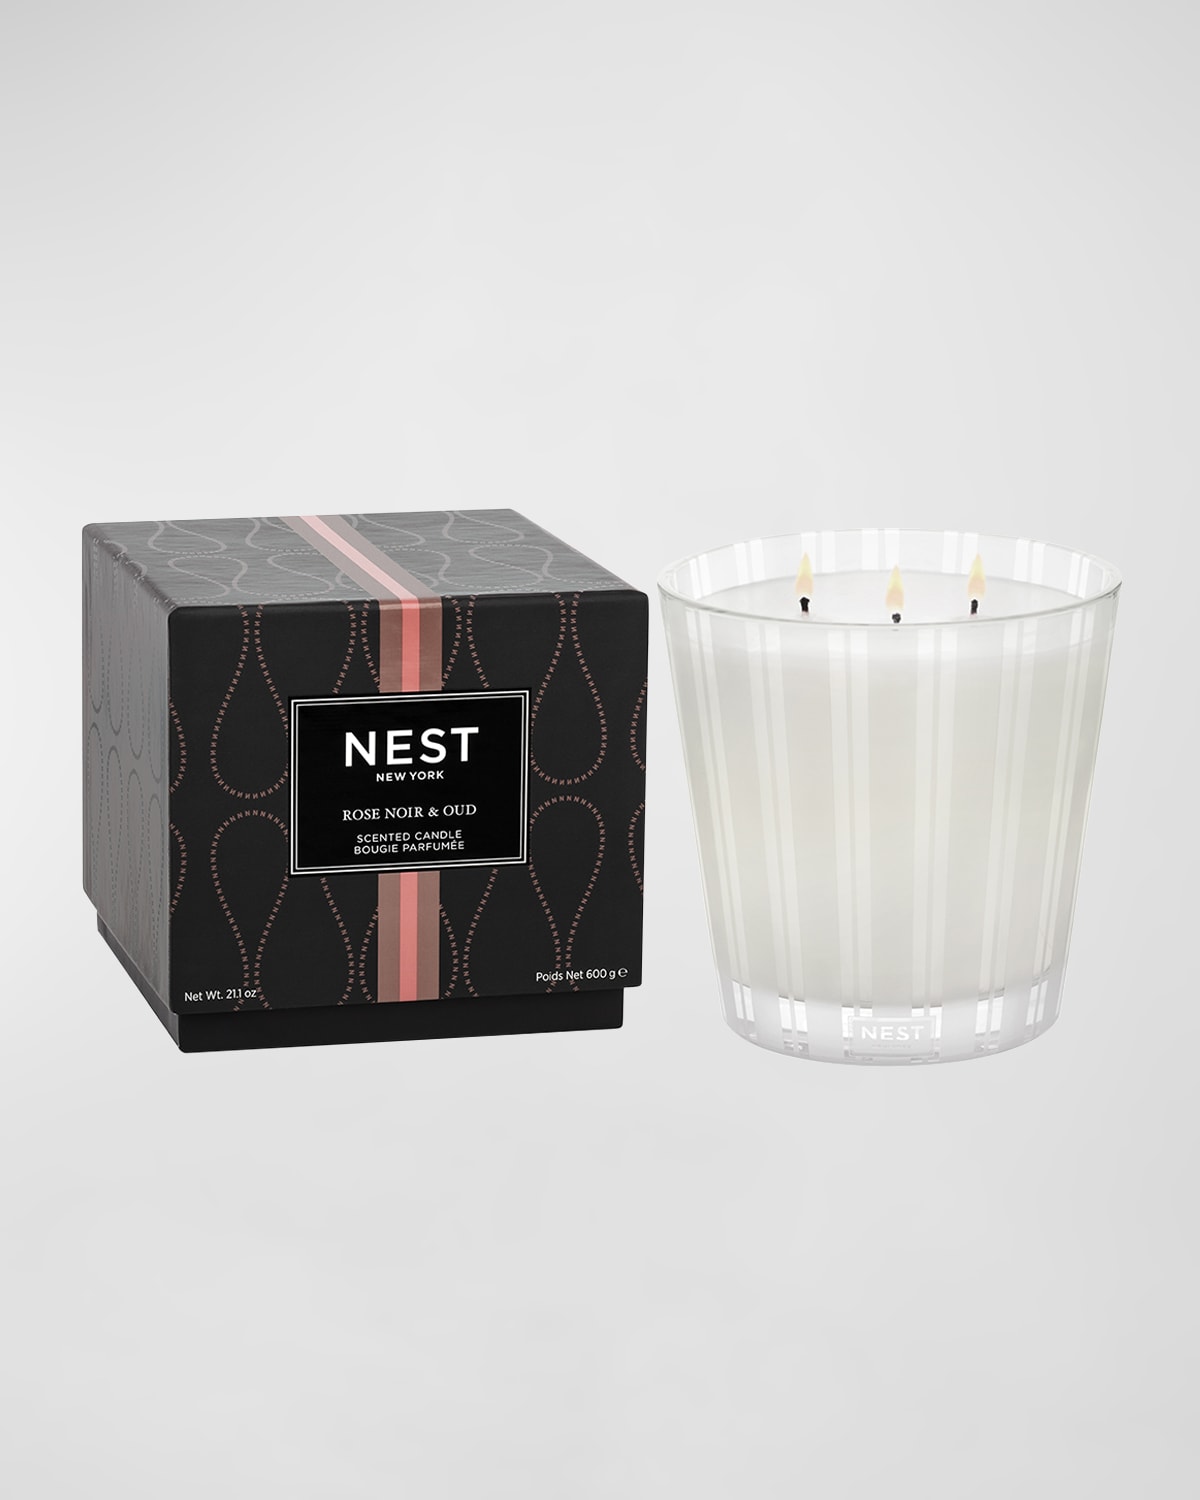 Nest New York 21.1 Oz. Rose Noir & Oud 3-wick Candle